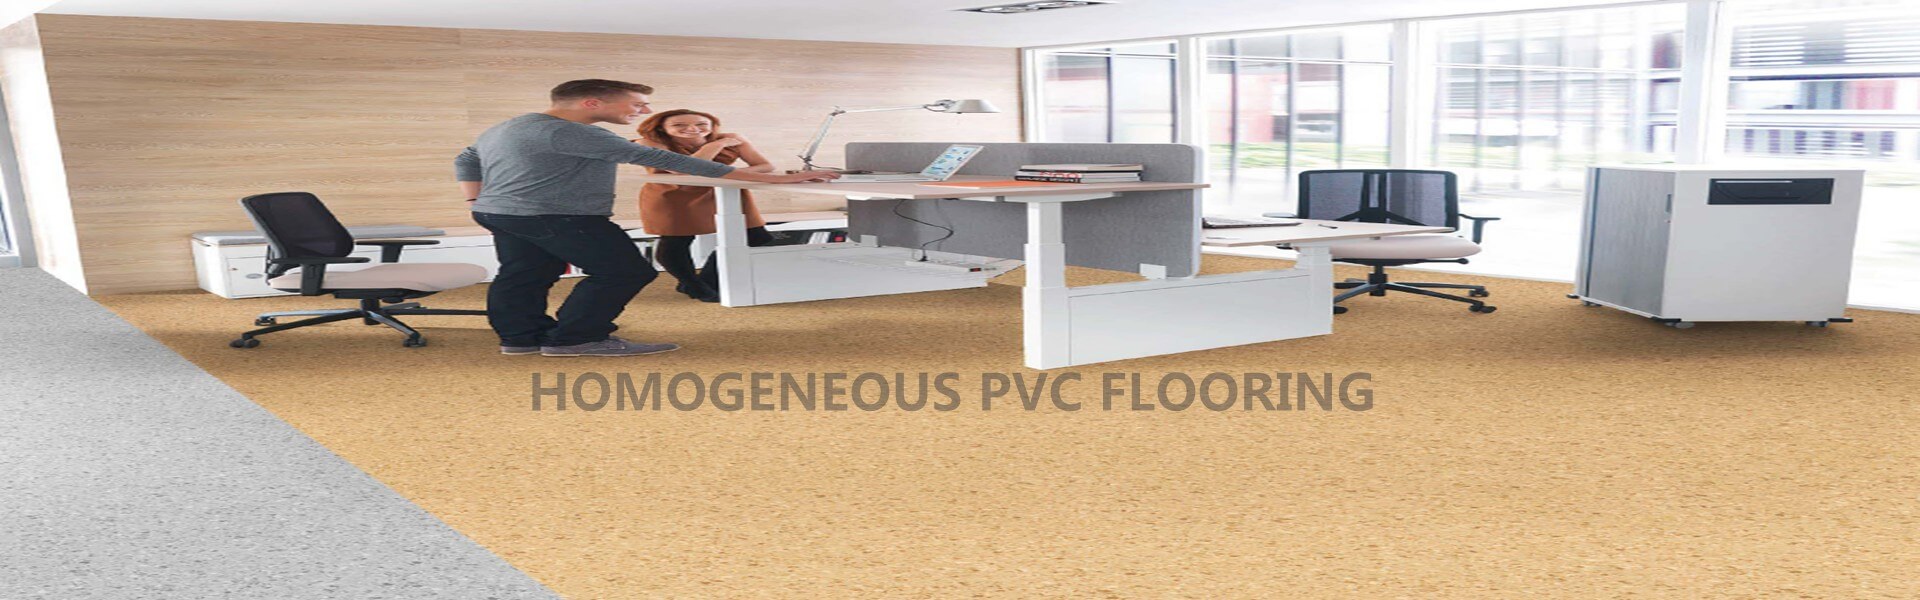 pvc floor in roll